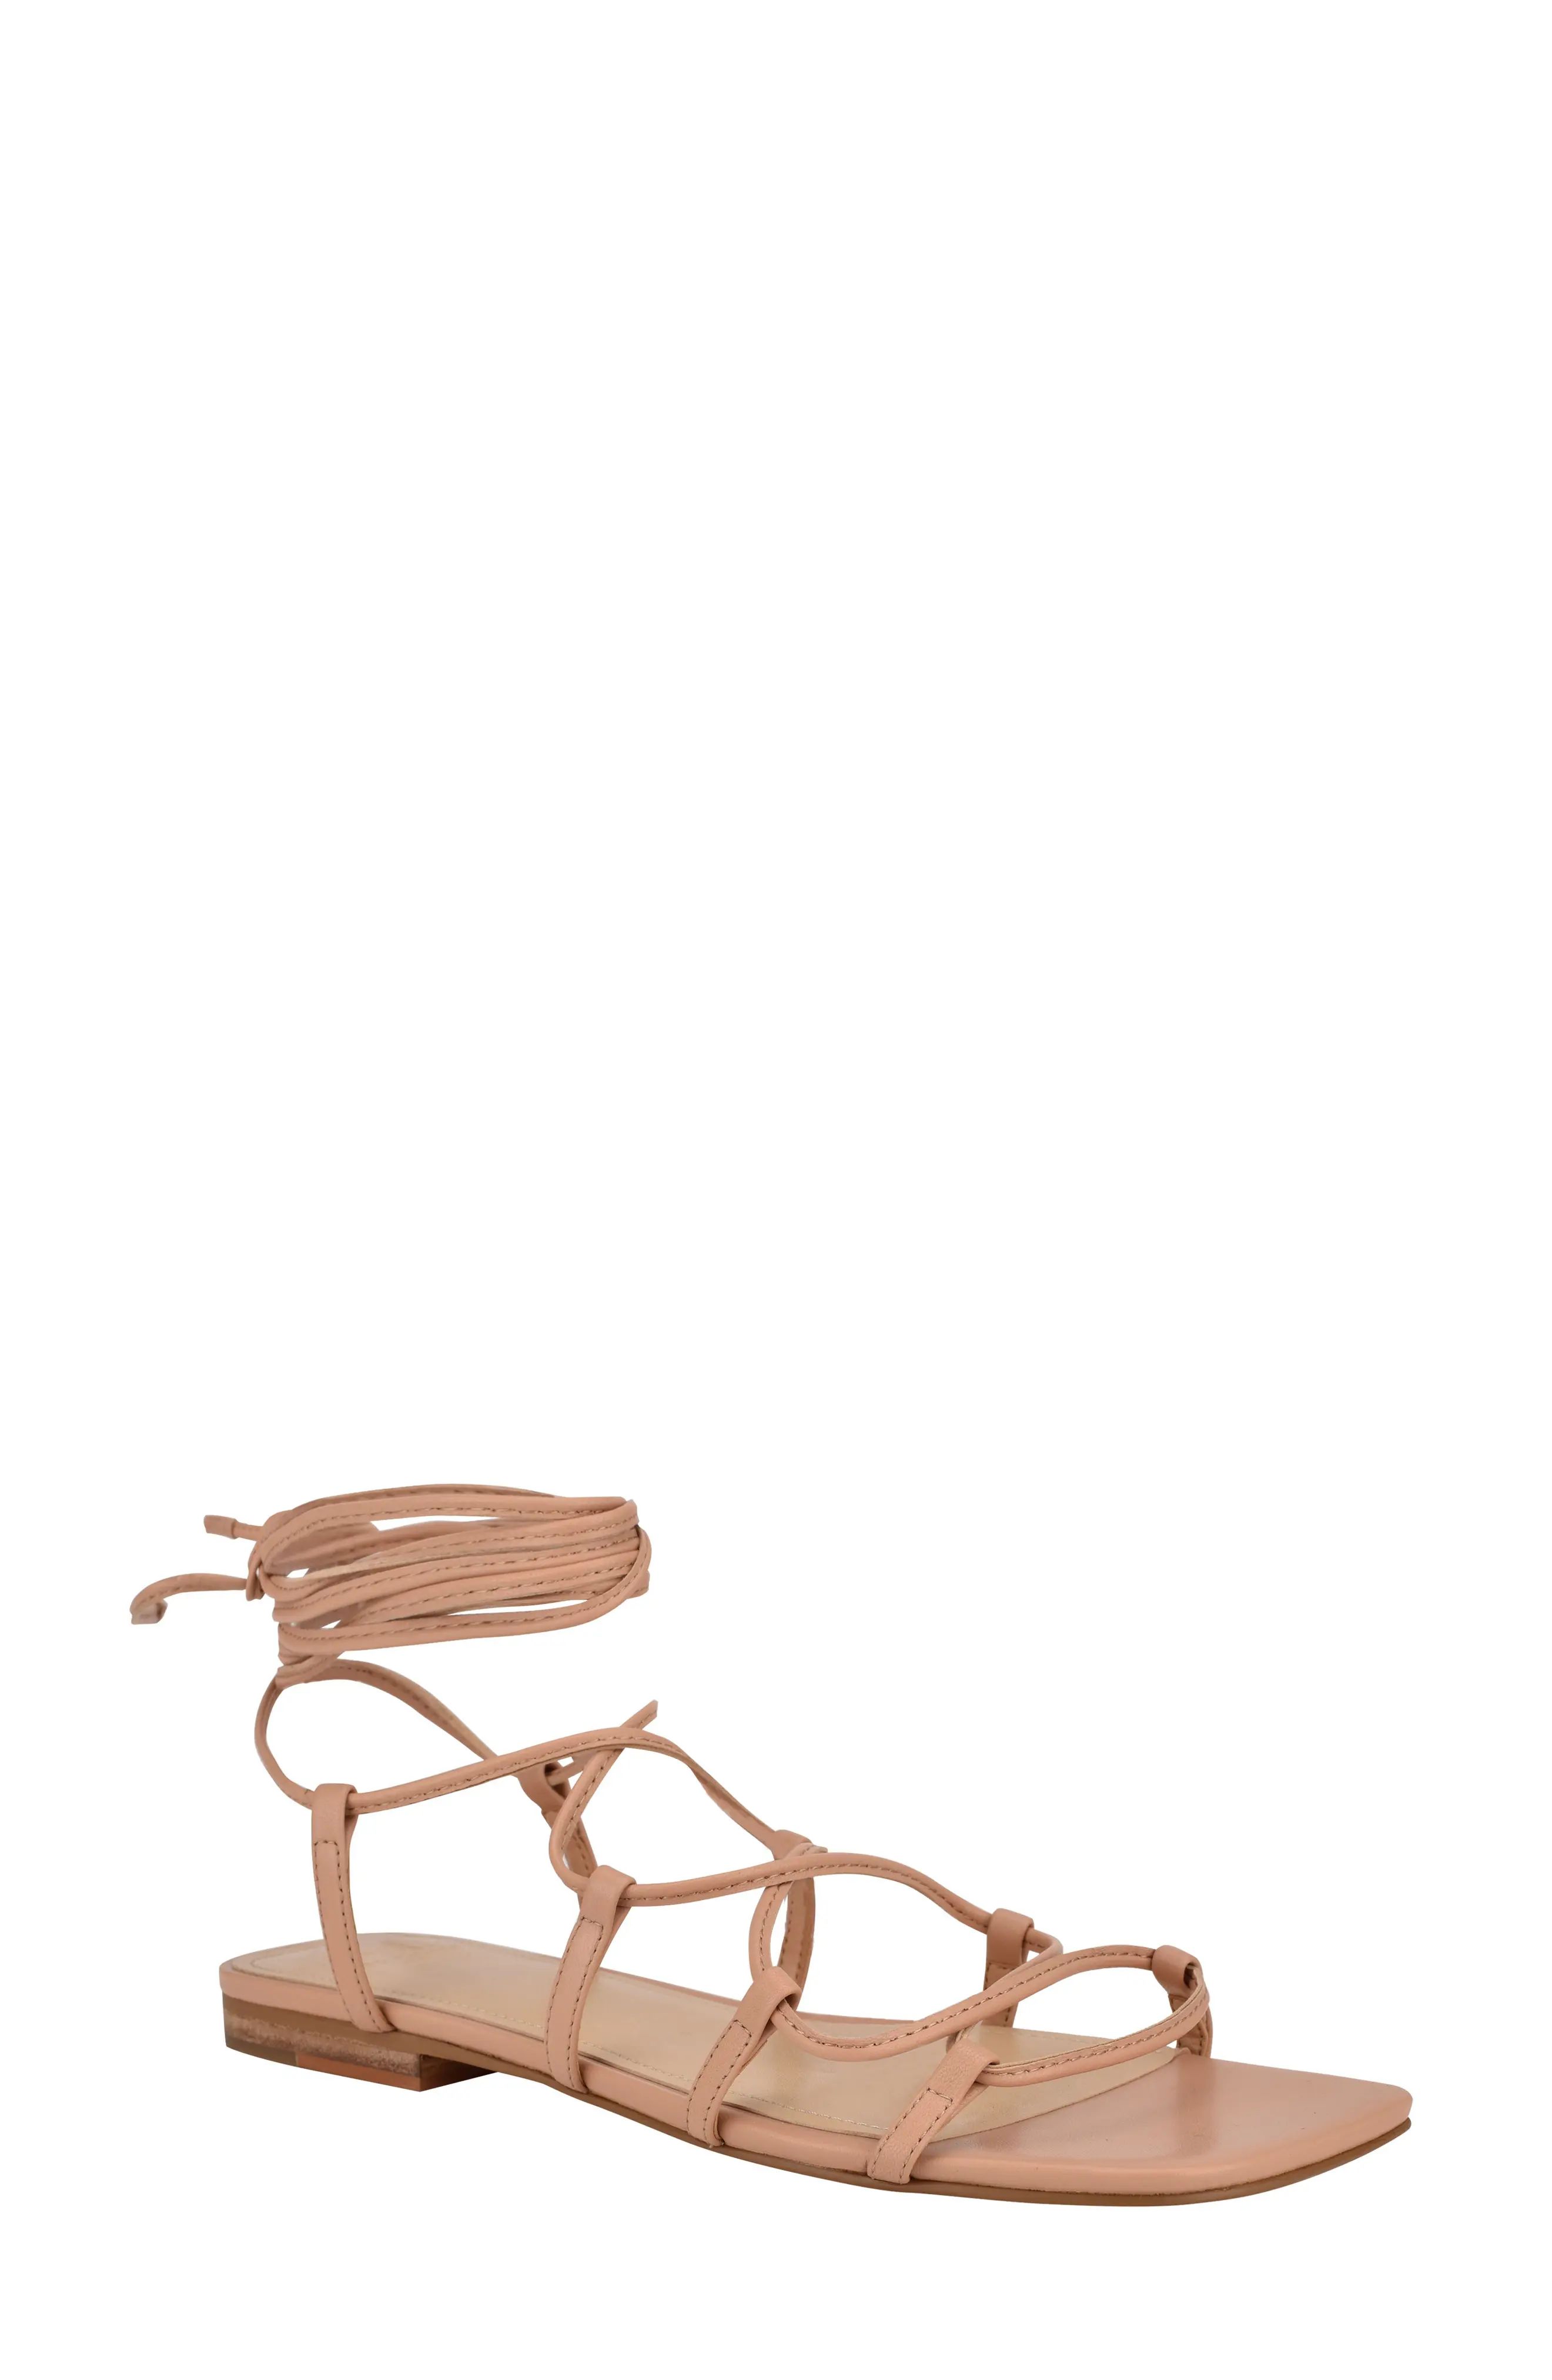 Women's Marc Fisher Ltd Mahalia Strappy Sandal, Size 8.5 M - Beige | Nordstrom